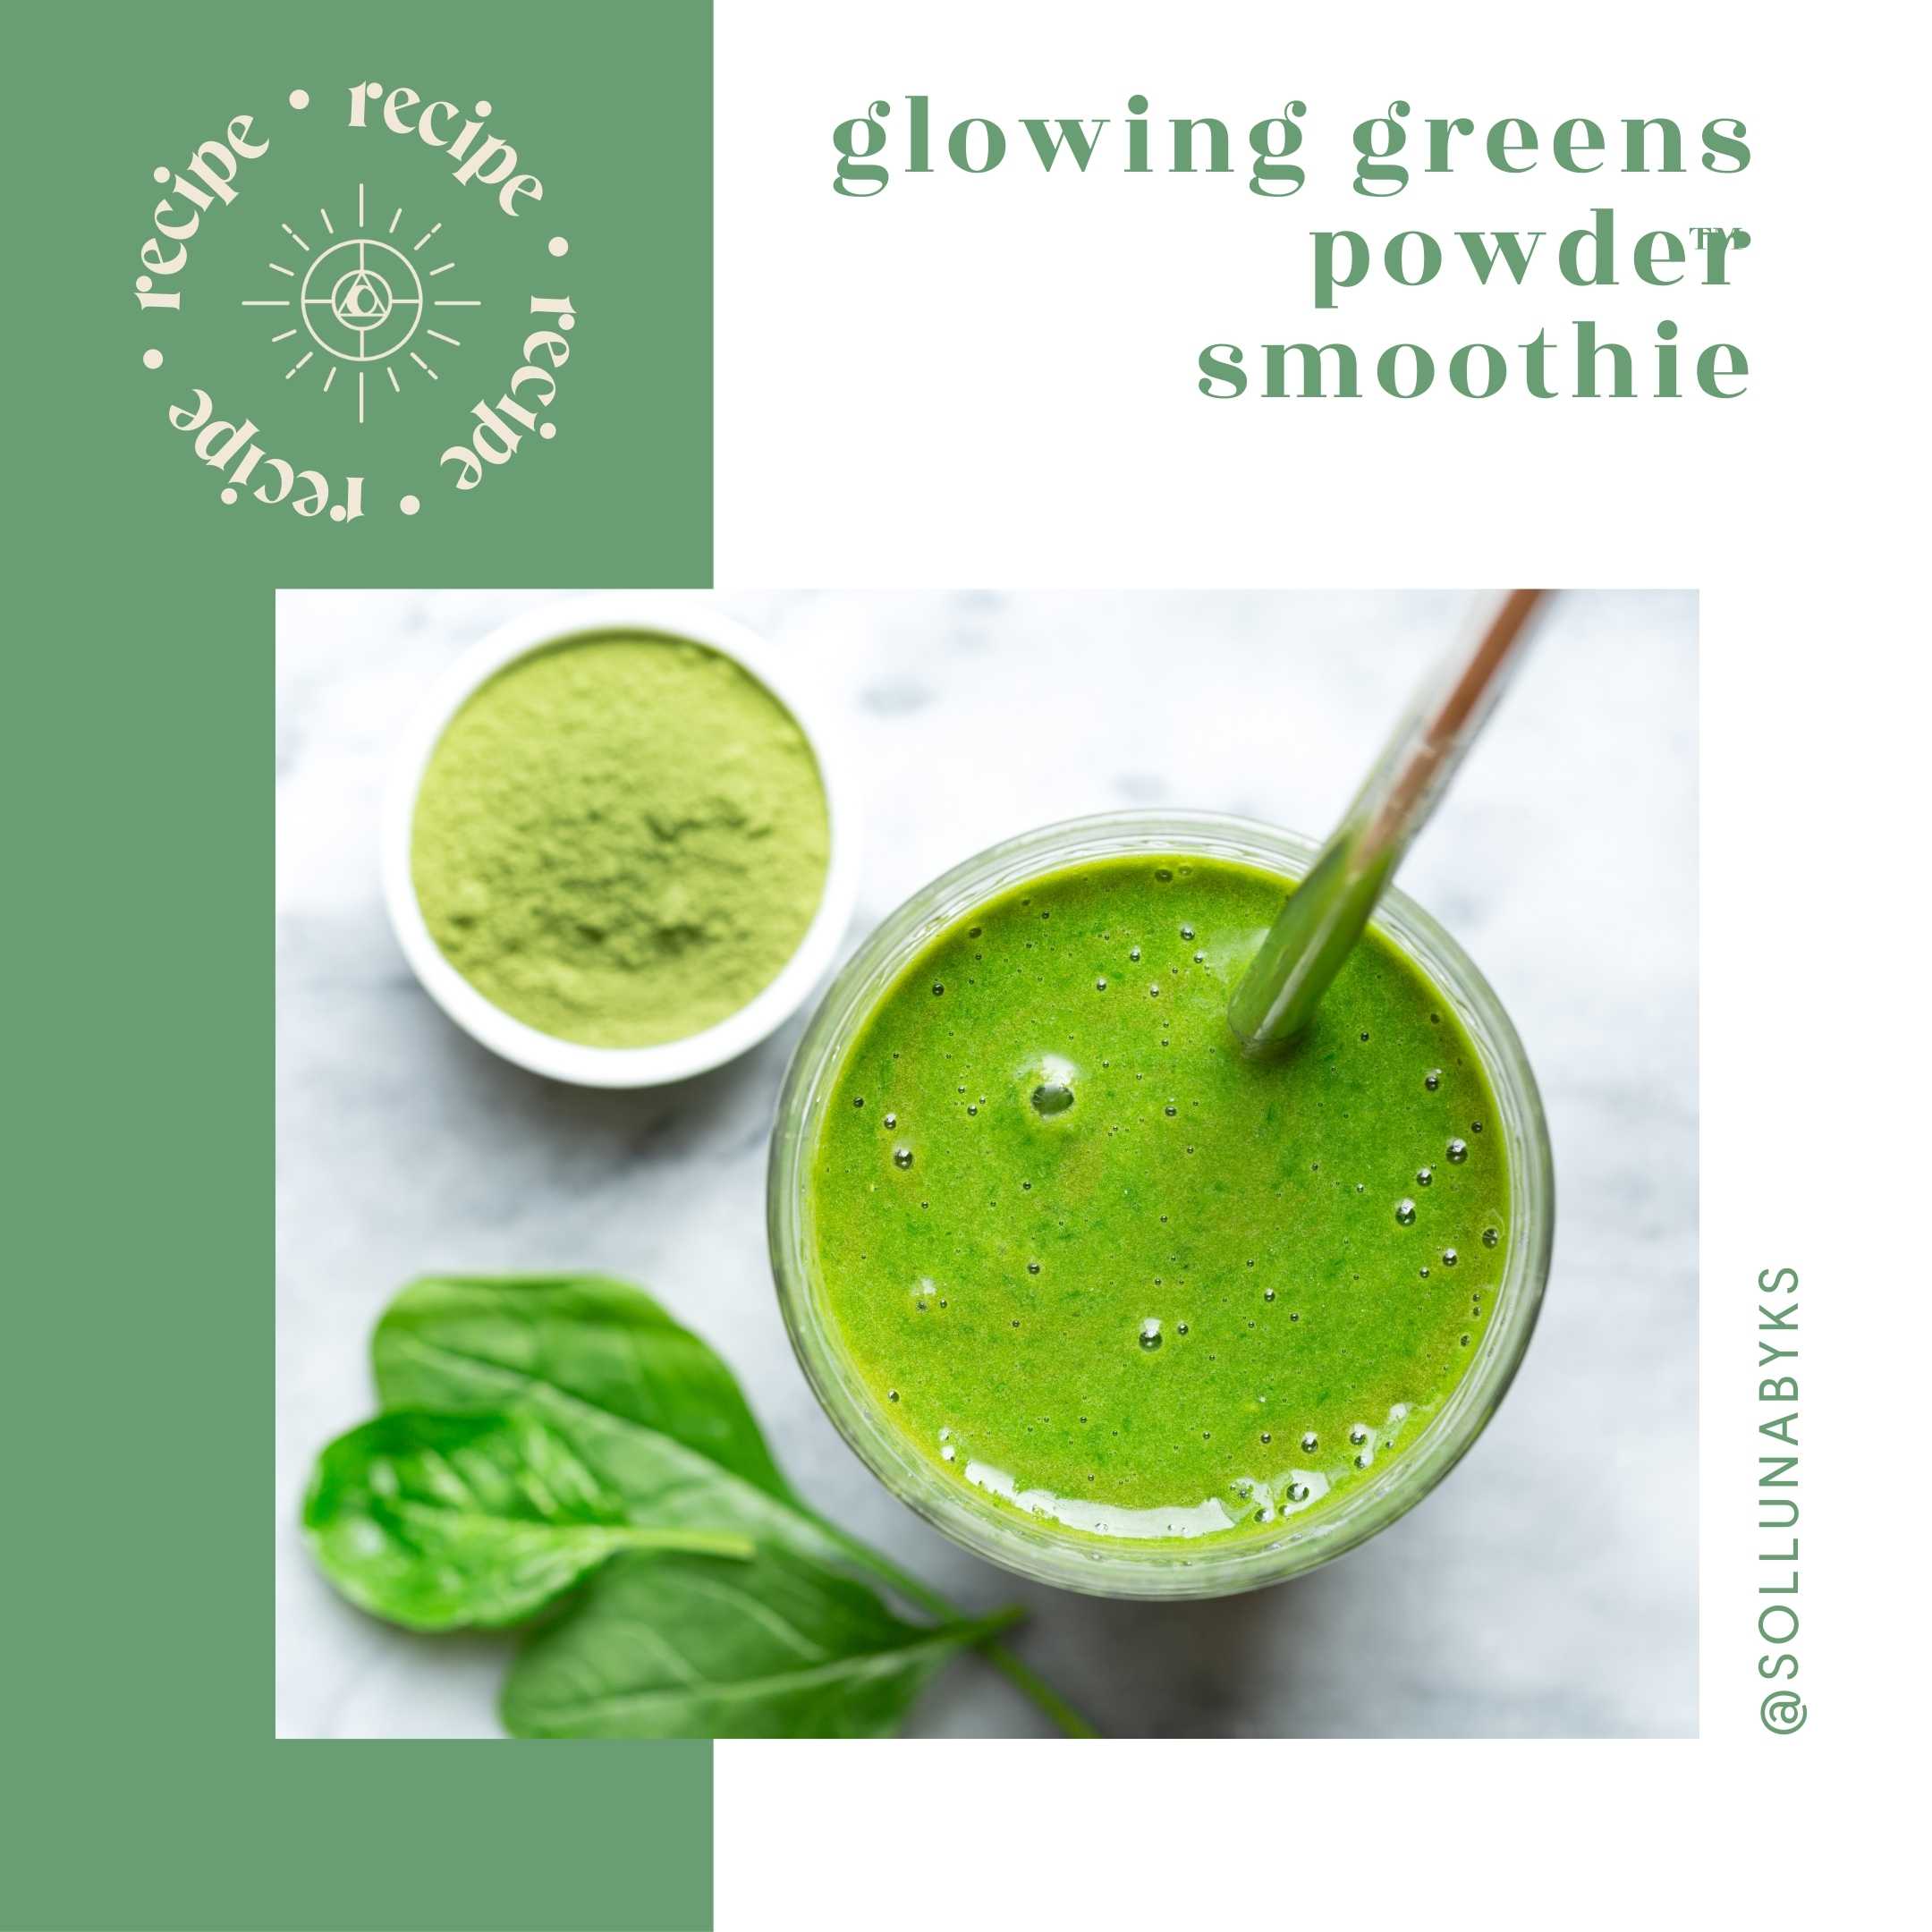 Glowing Greens Powder™ Smoothie